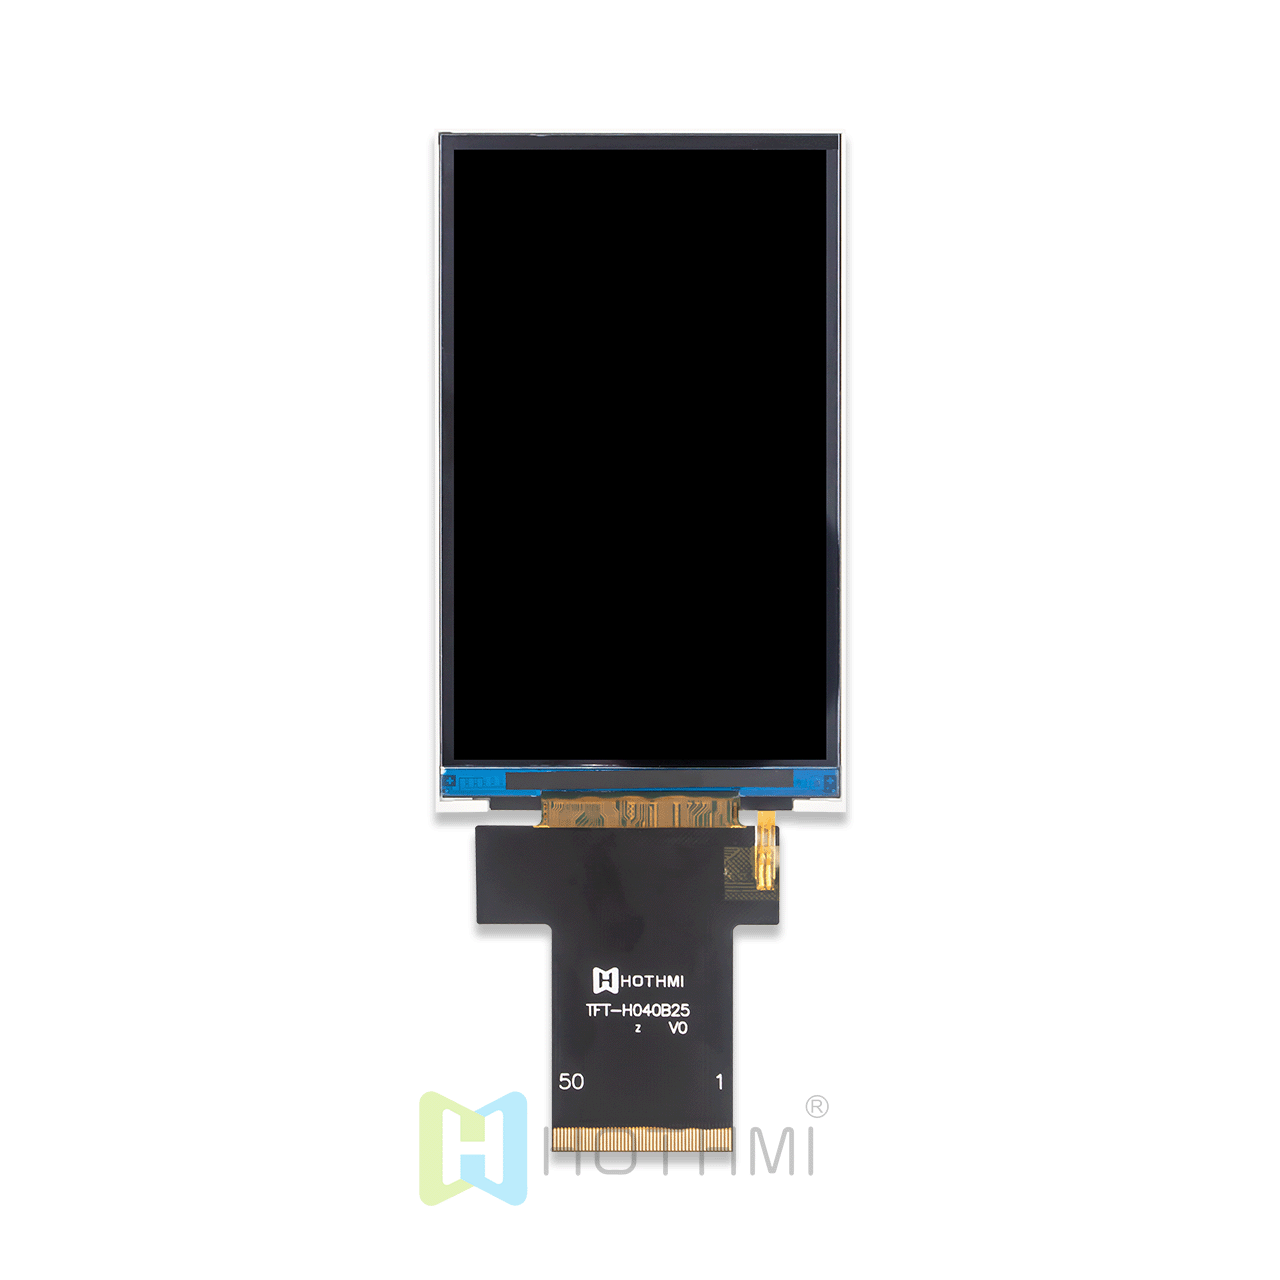 4-inch TFT LCD display module/IPS full viewing angle/HD 480x800 dot matrix/ILI9806/readable under sunlight